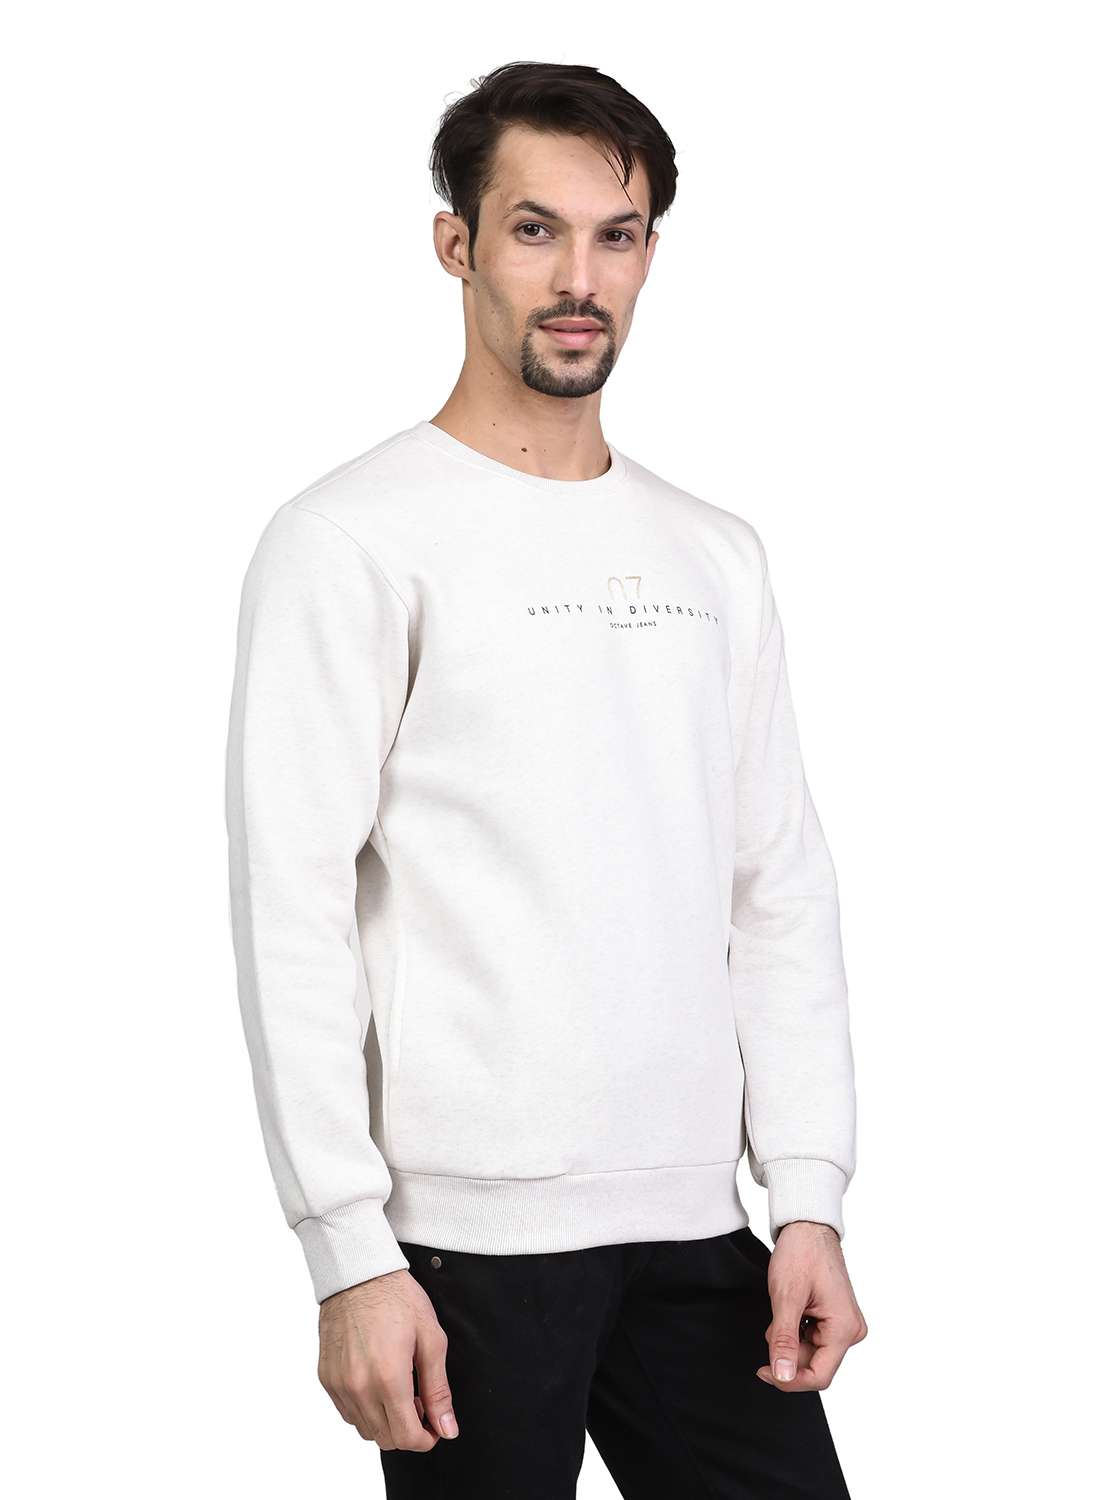 Buy Octave Men's White Melange Sweatshirt Online @ ₹1014 from ShopClues